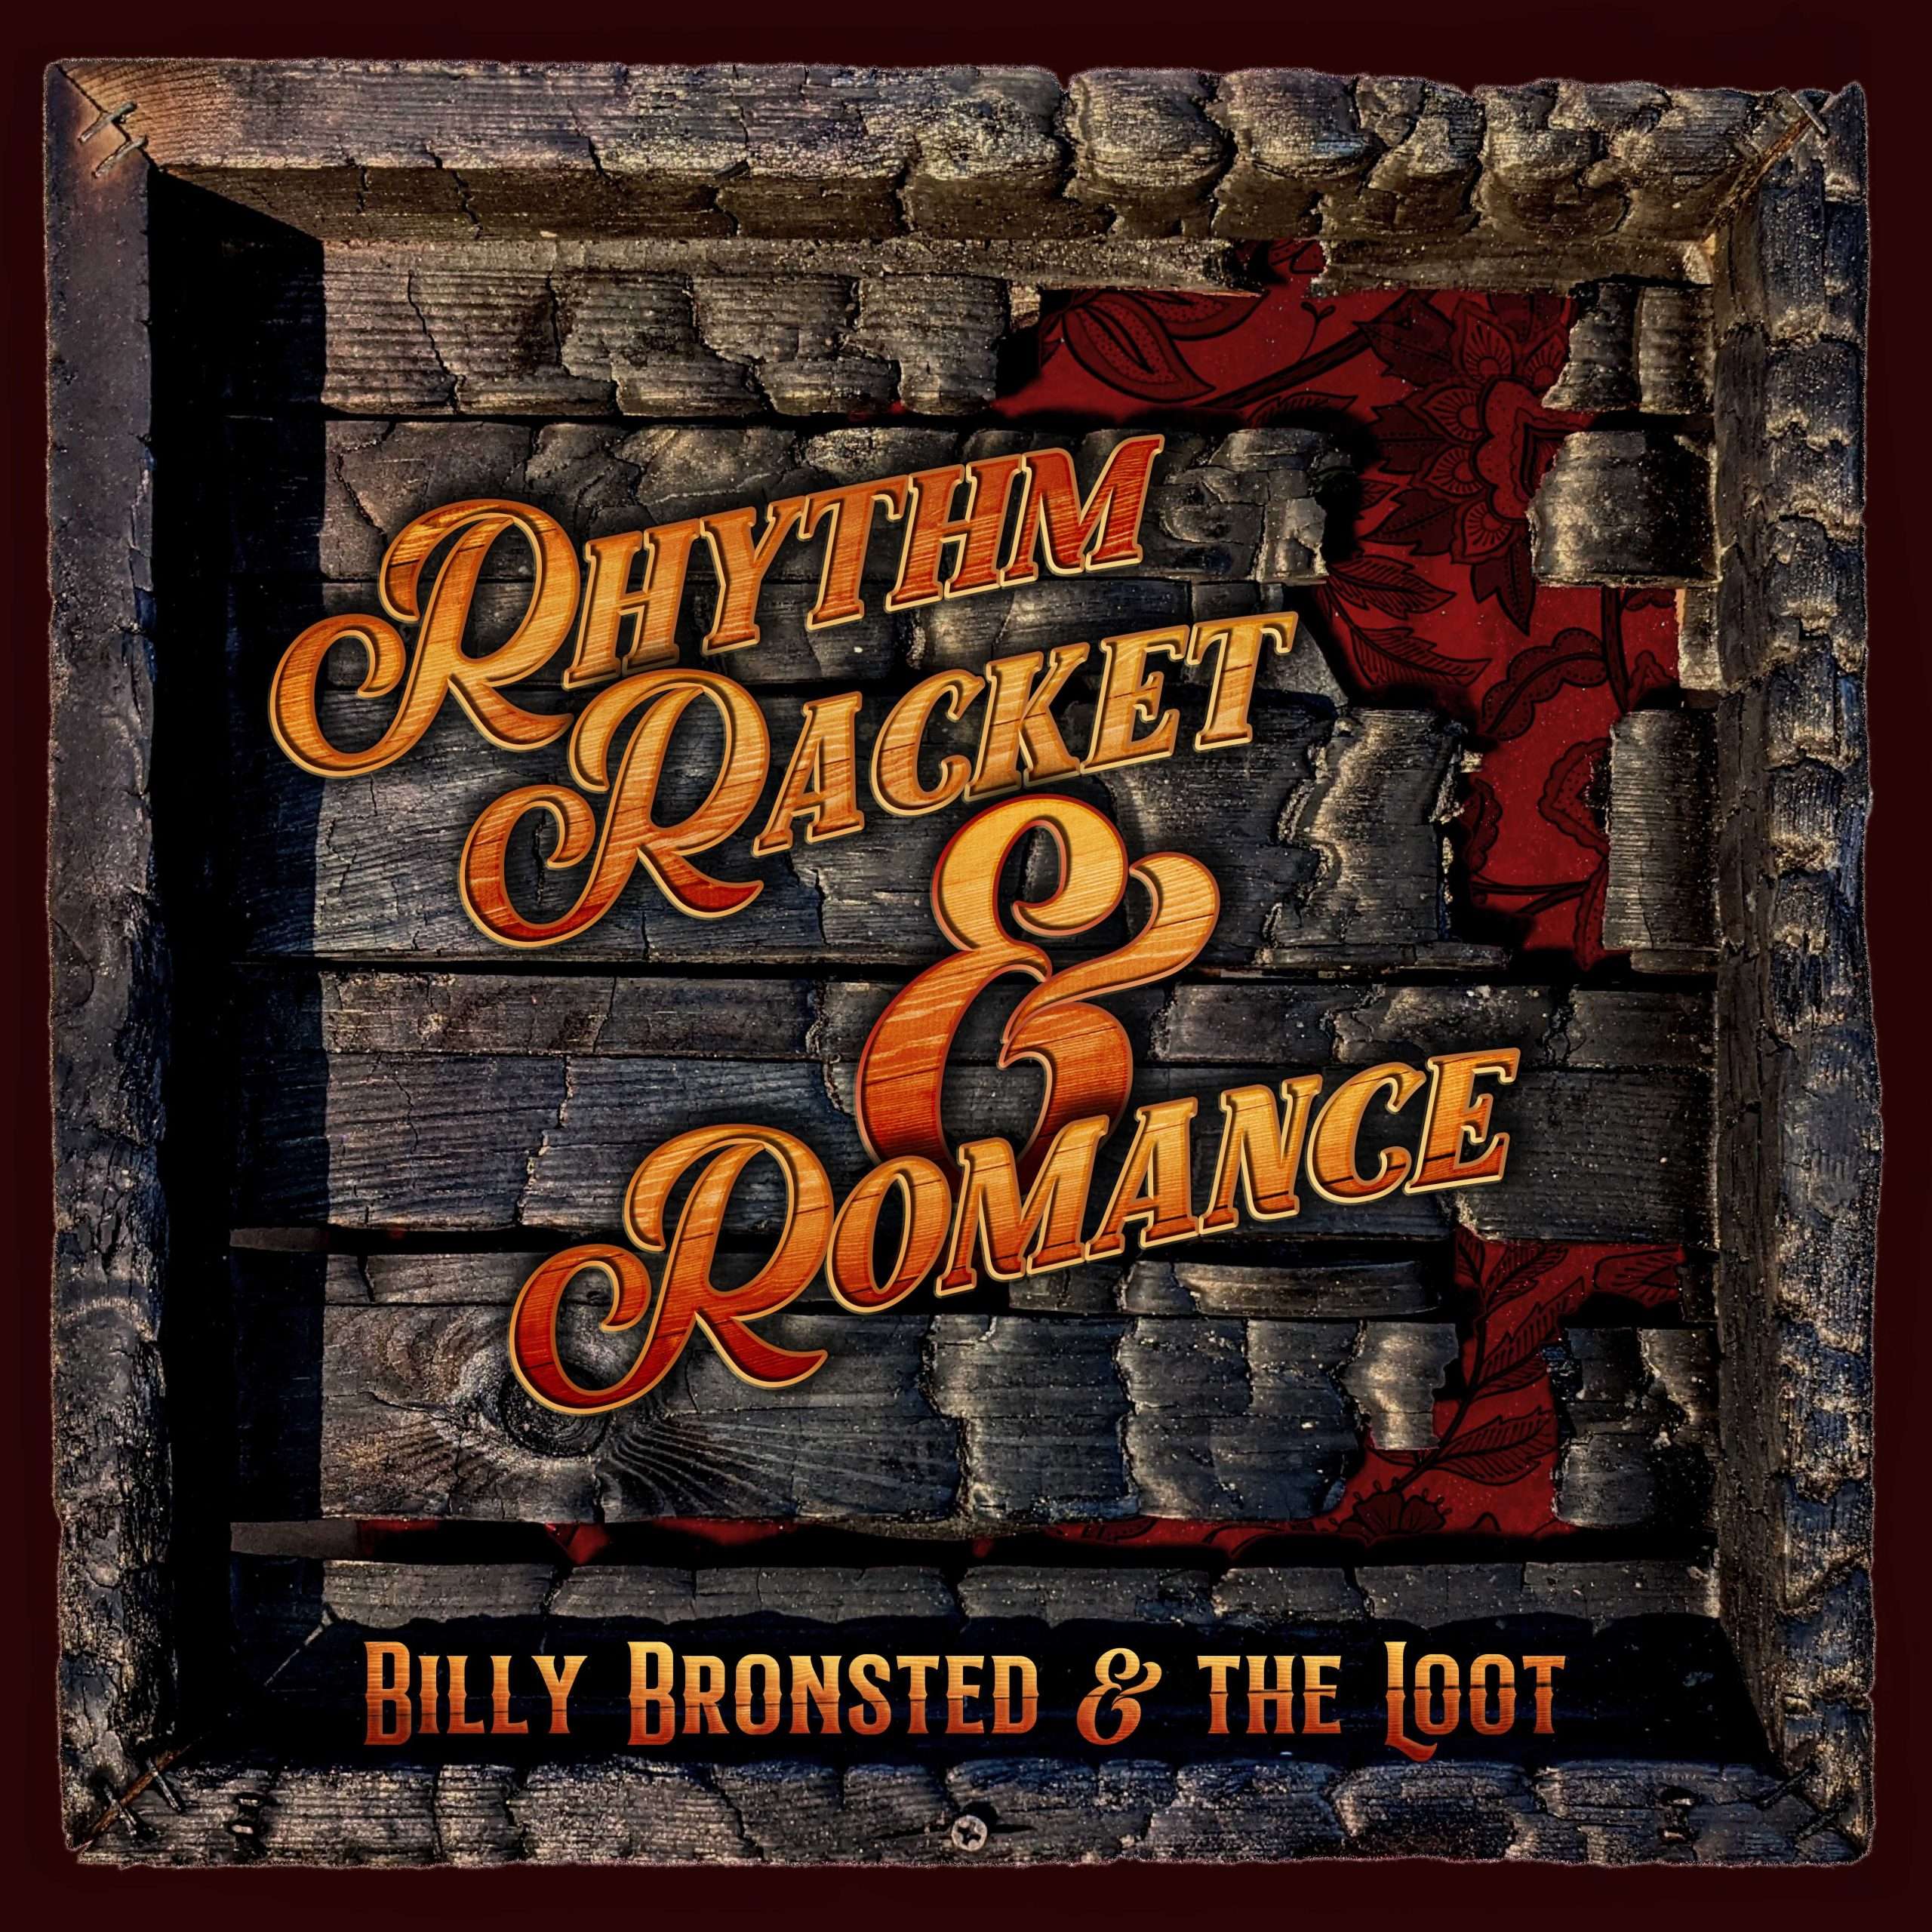 Racket, & Romance (Original Album) by Billy Bronsted Rhythm